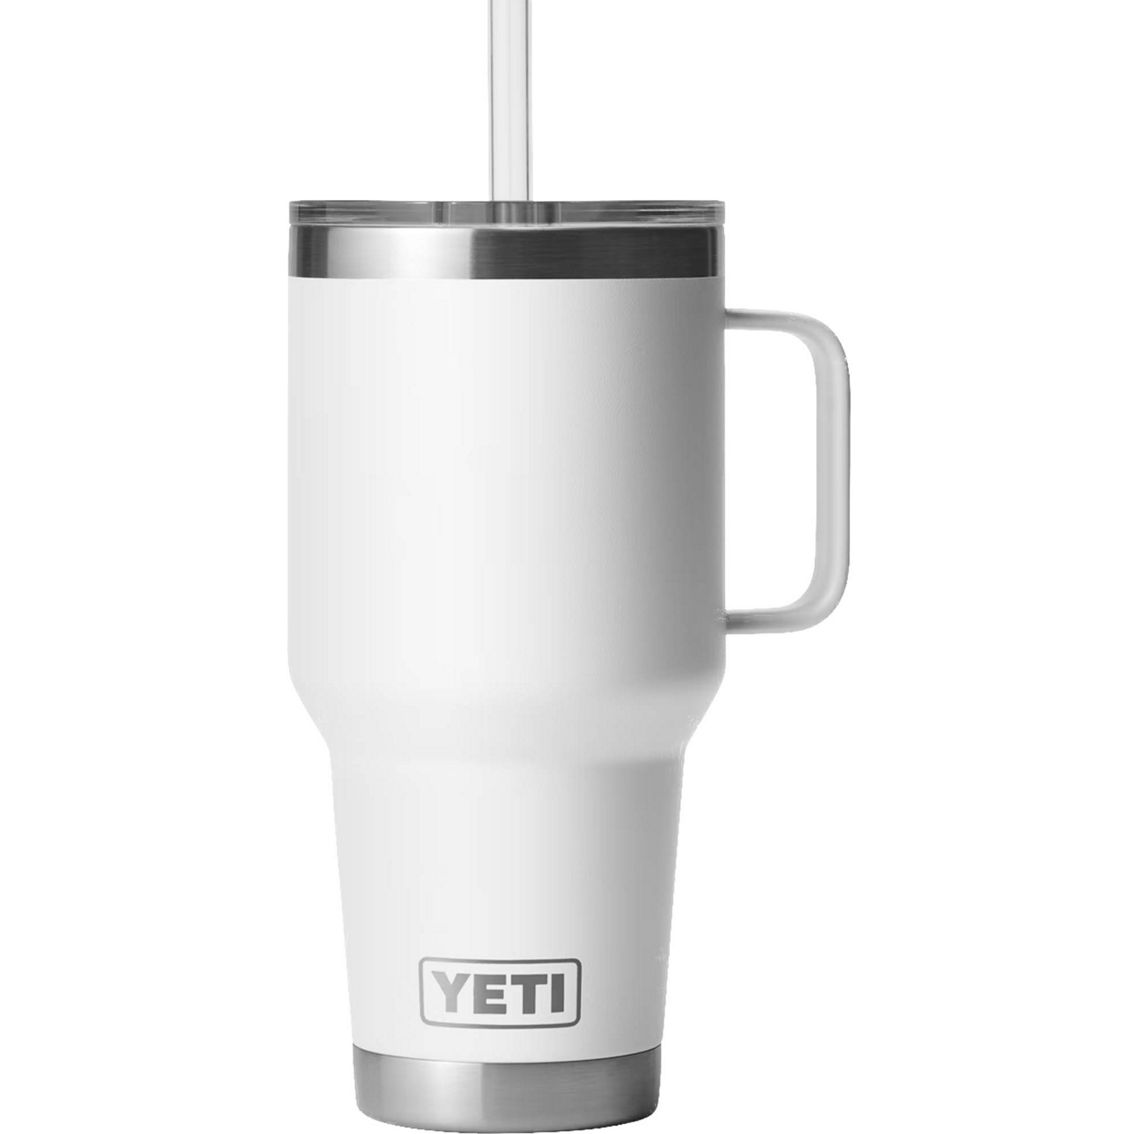 Yeti Rambler Straw Mug 35 Oz., Travel Mugs, Sports & Outdoors